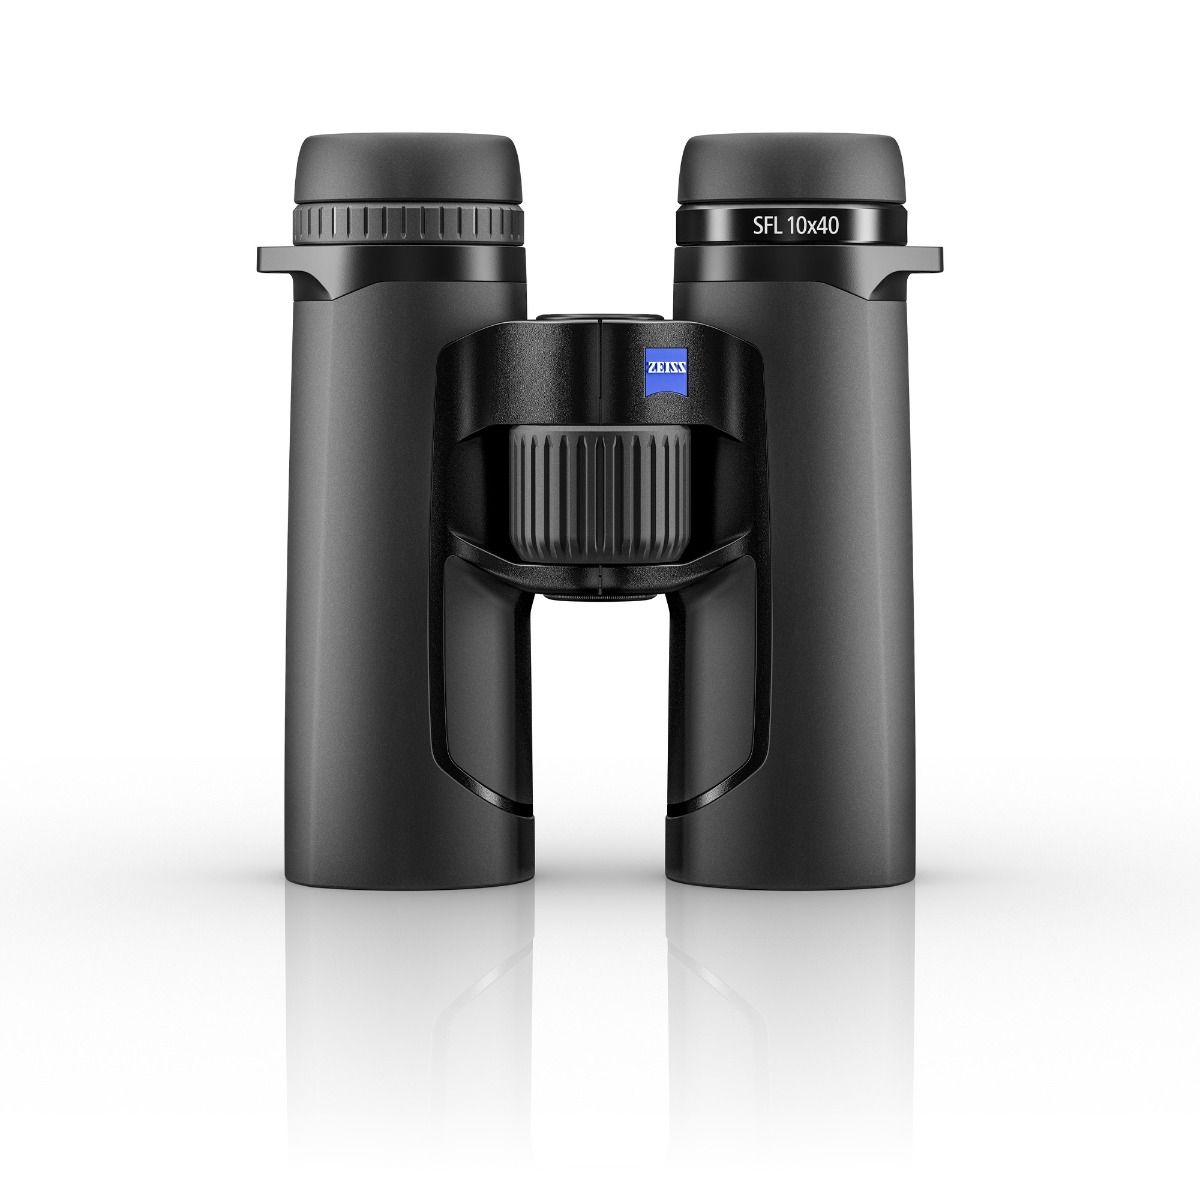 Product Image of Zeiss SFL 10x40 Binoculars